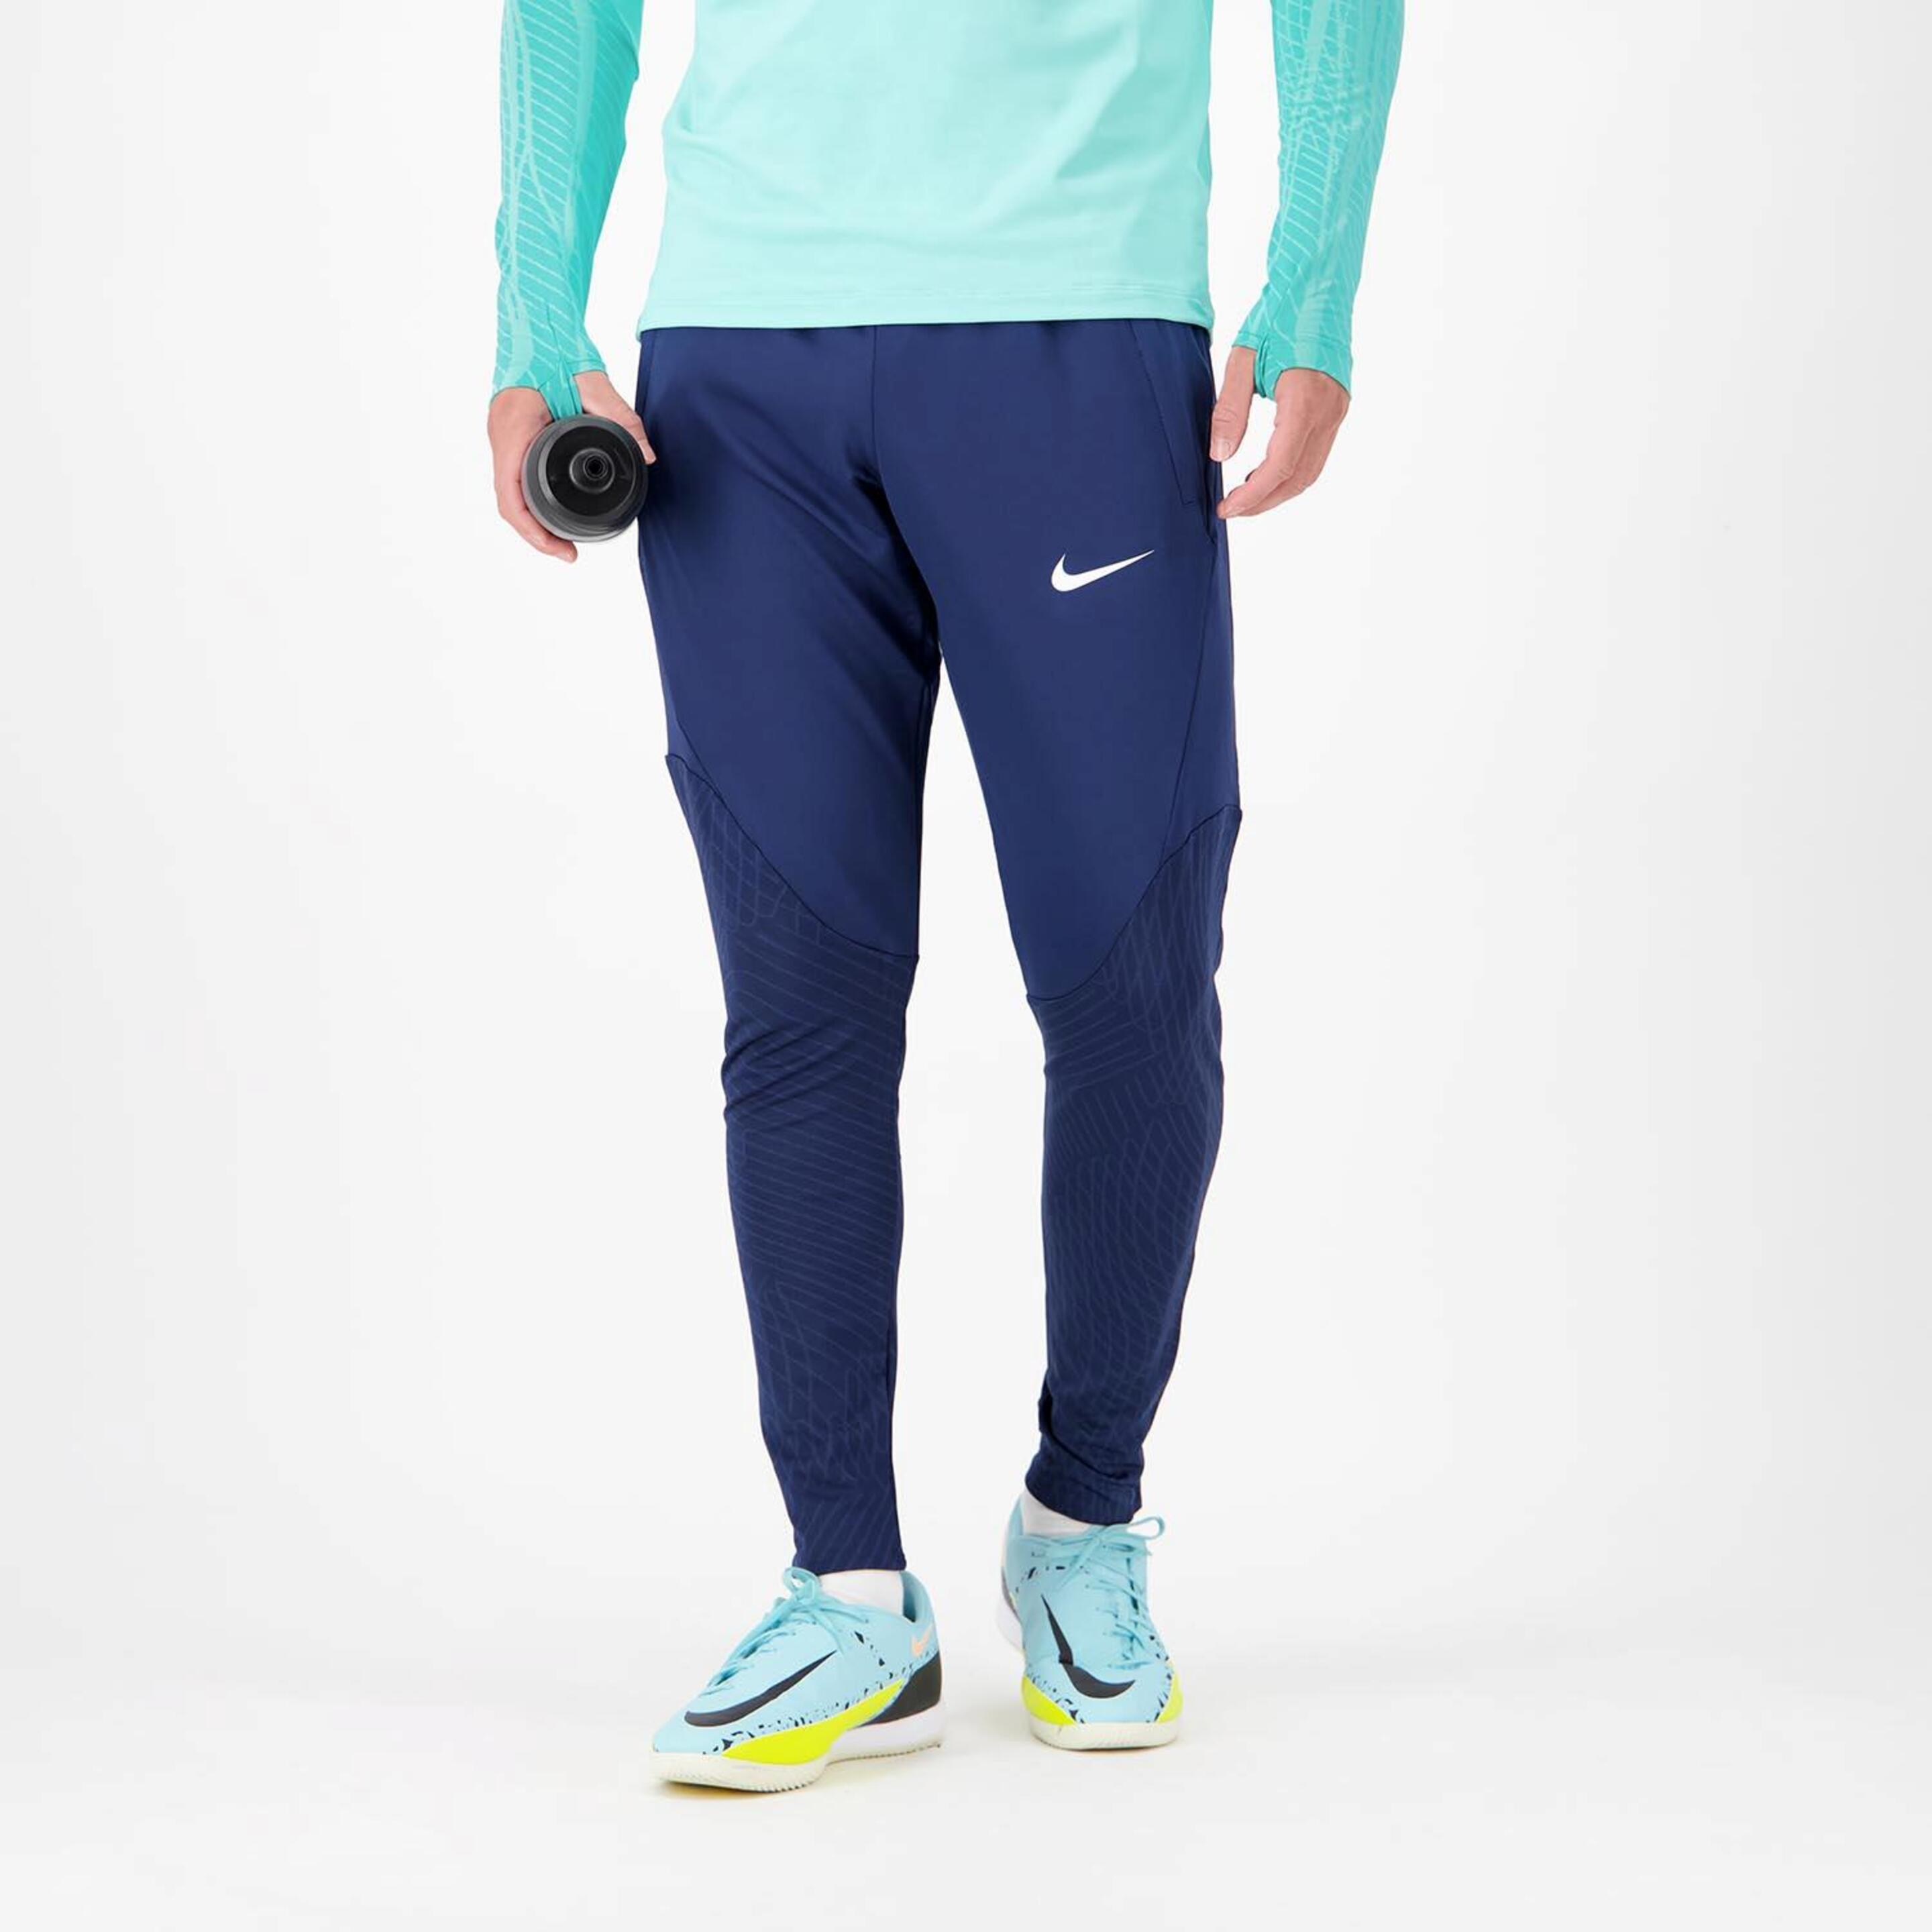 Nike Strike - azul - Calças Futebol Adulto